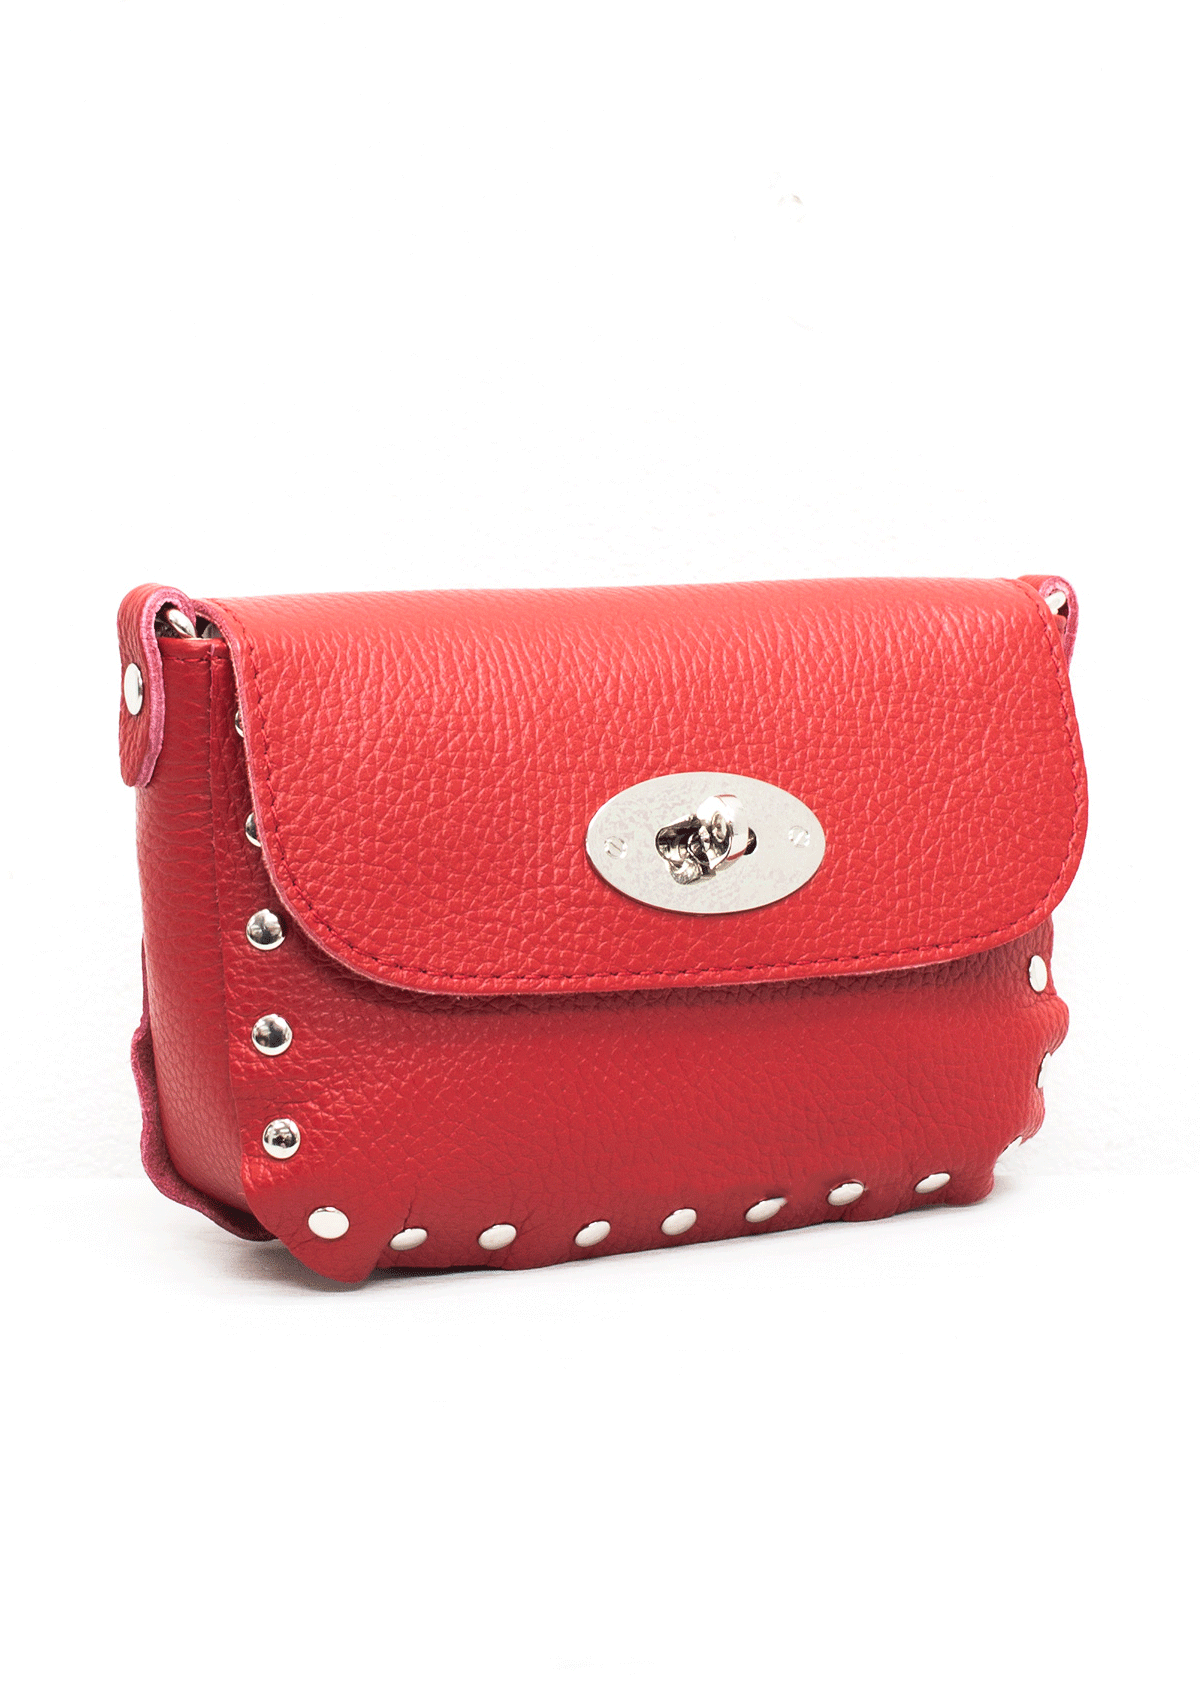 Red Minnie Bag